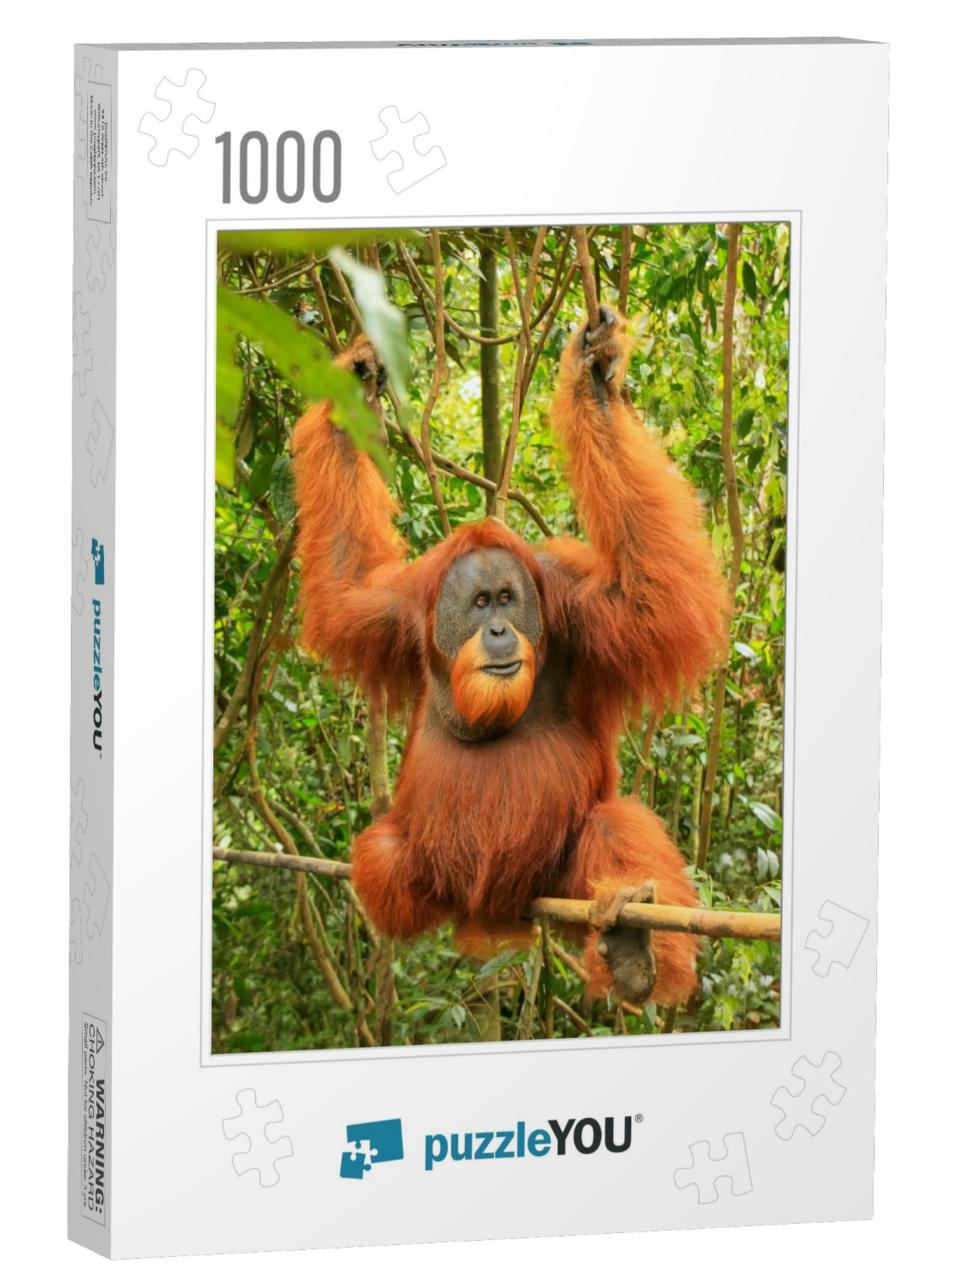 Male Sumatran Orangutan Pongo Abelii Sitting on a Bamboo... Jigsaw Puzzle with 1000 pieces